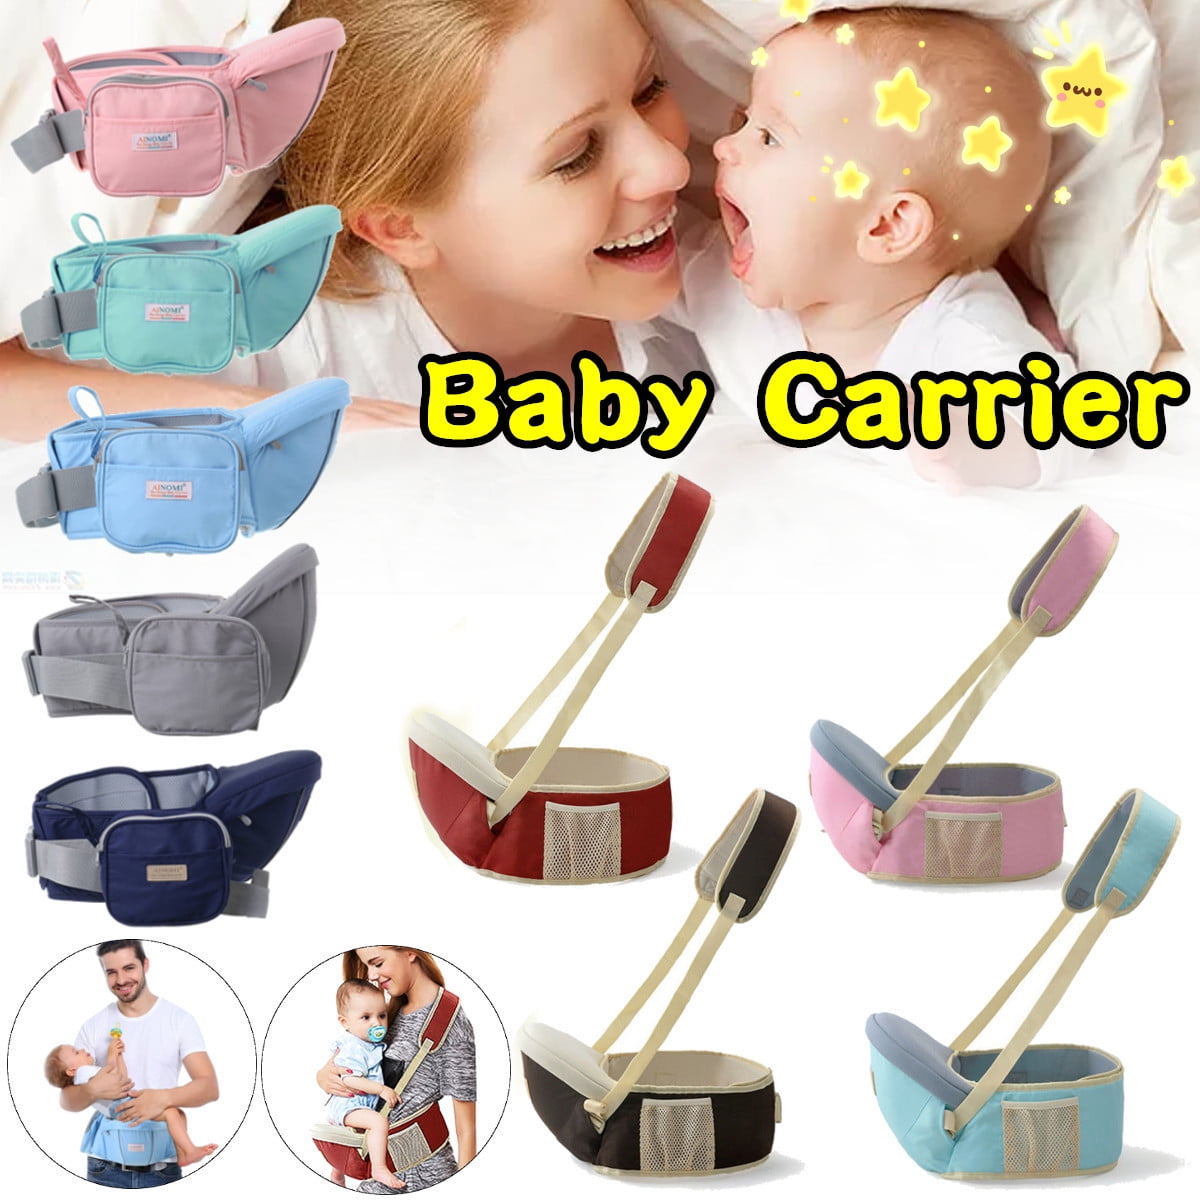 baby belt holder